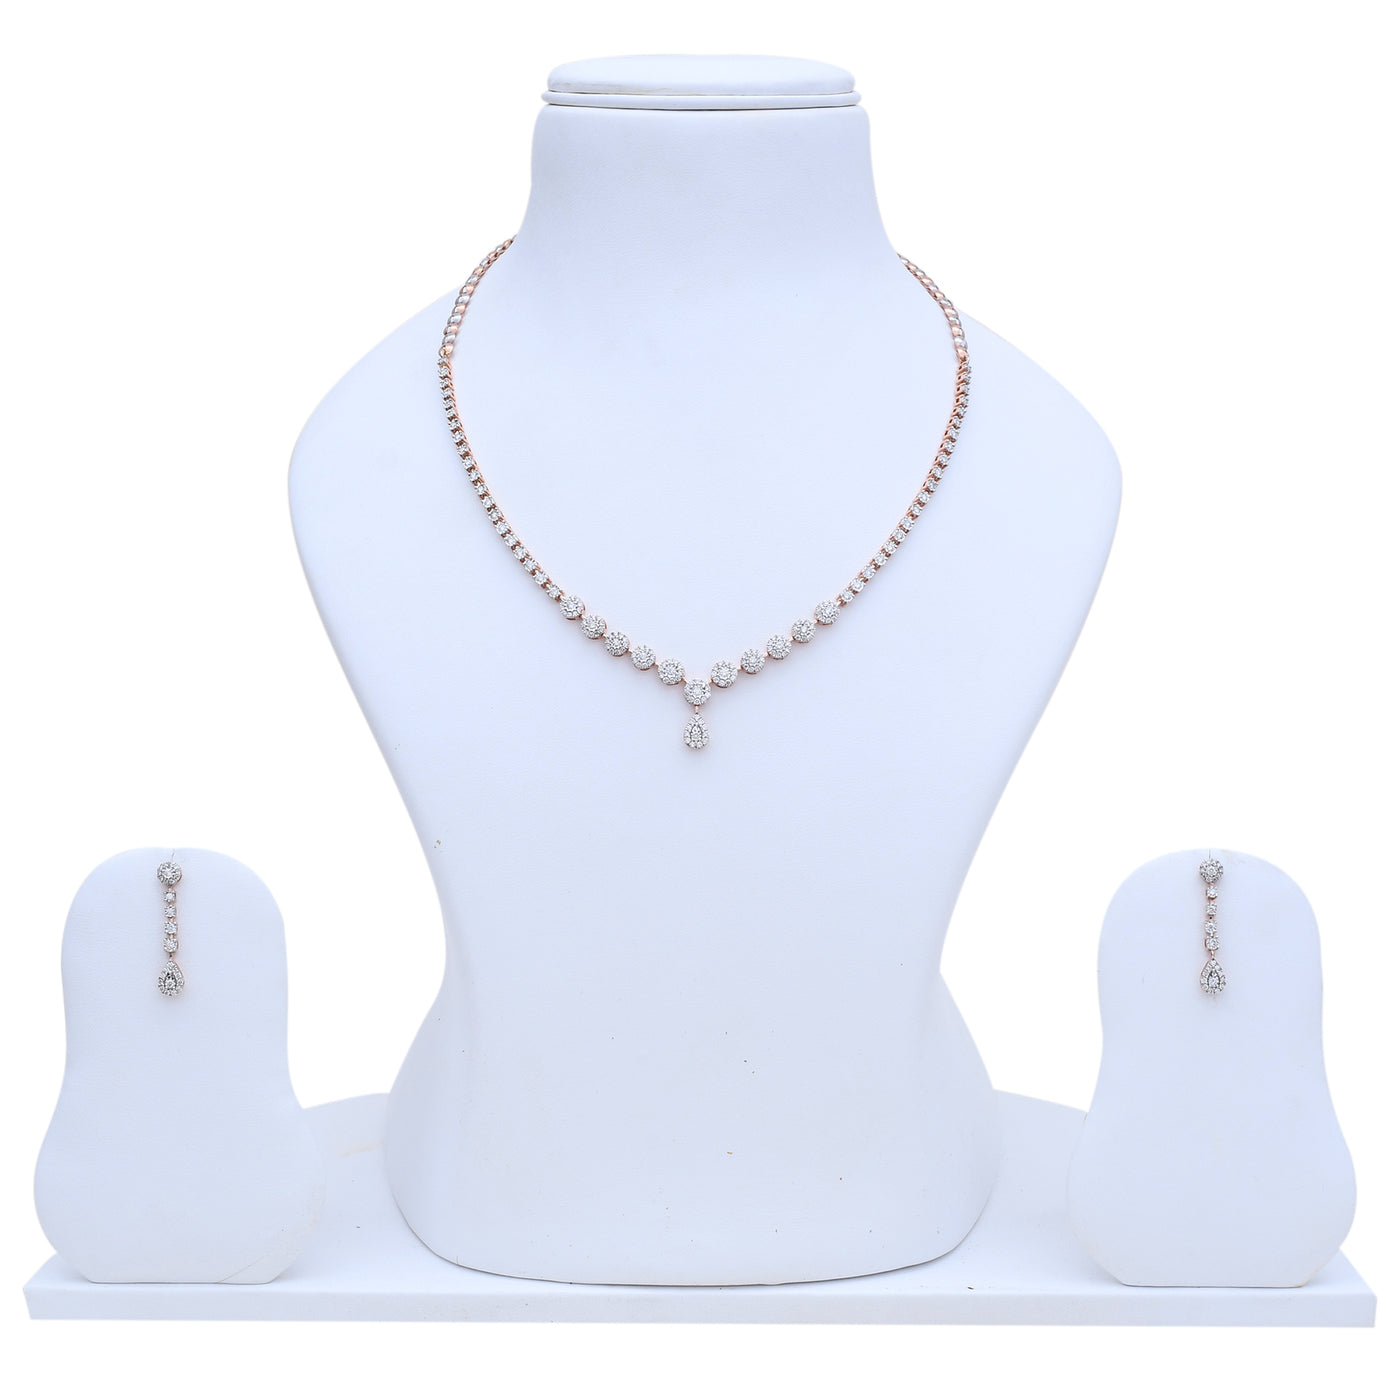 The Emily Diamond Necklace Set